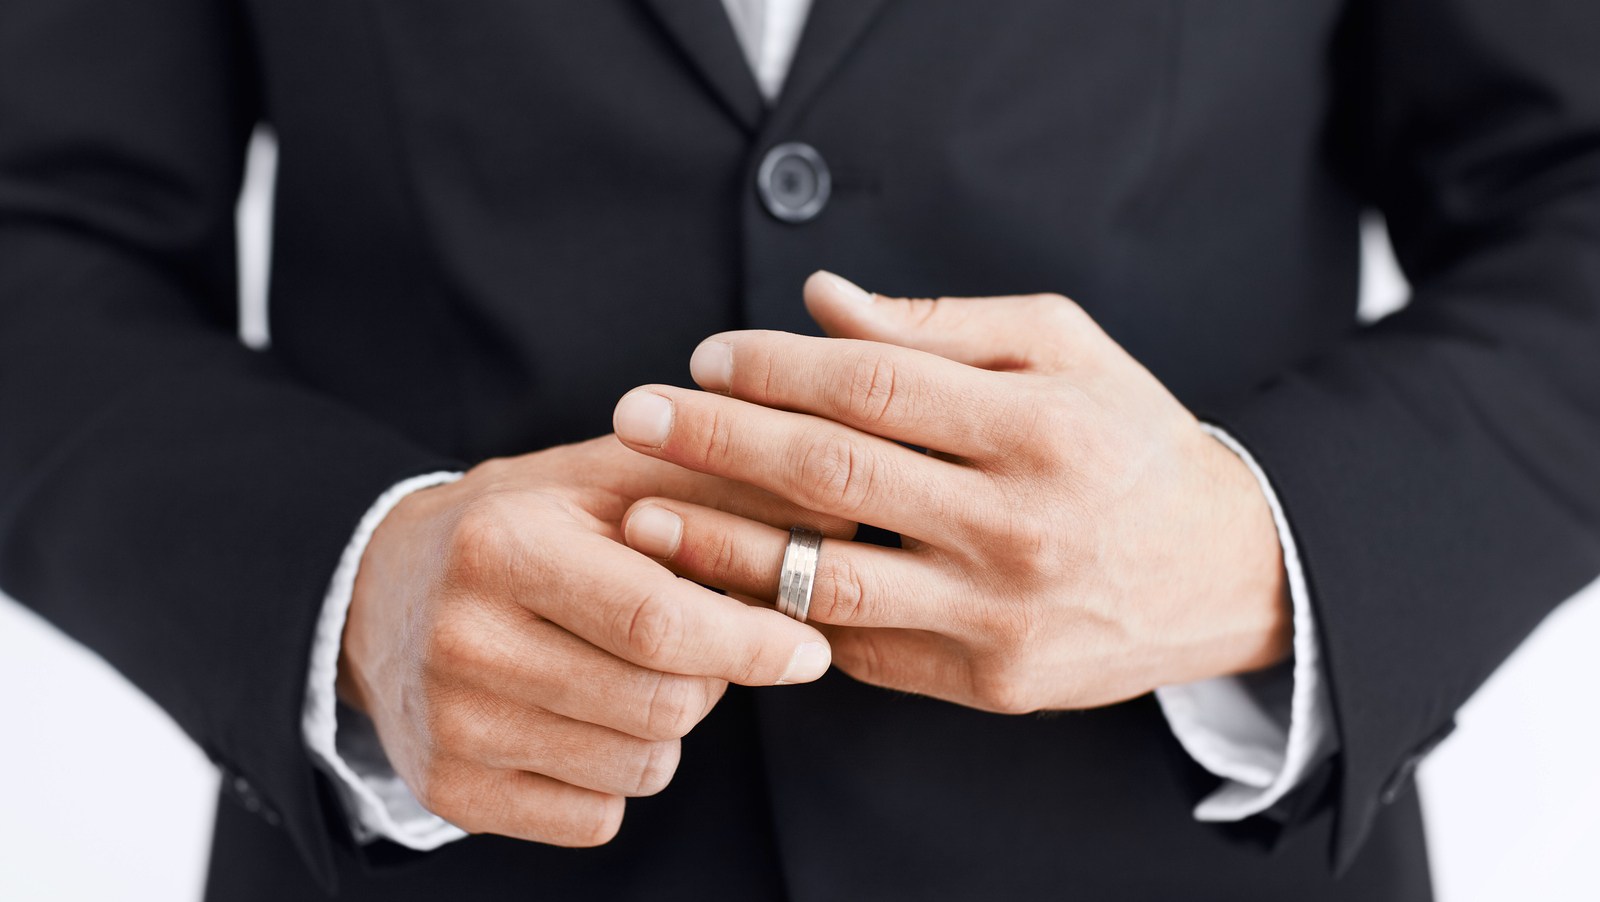 Кольцо носят при разводе